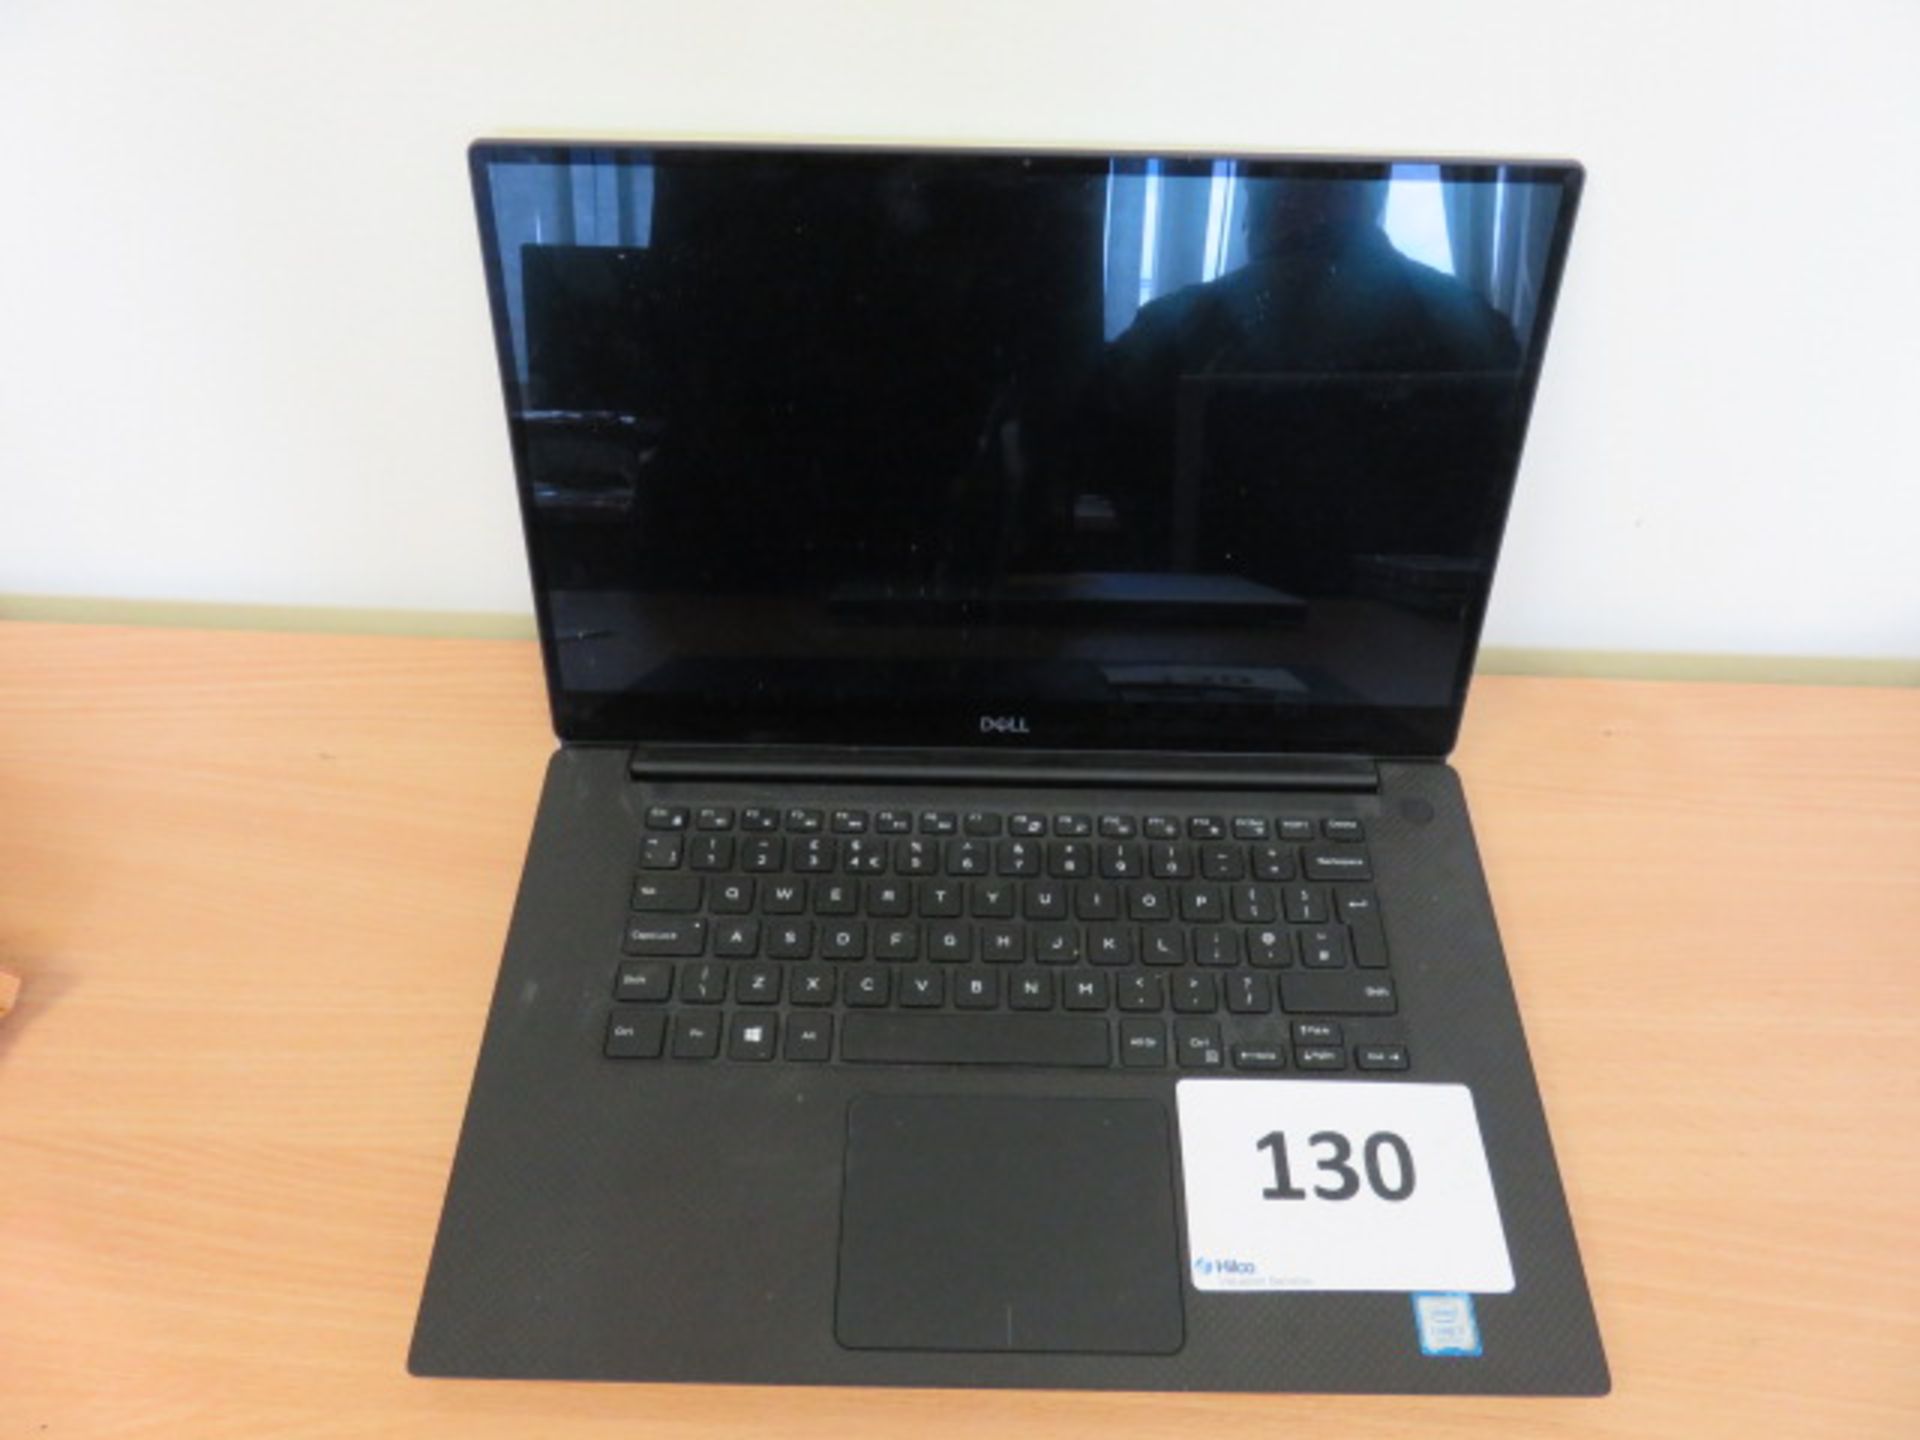 Dell XPS 15 7590 15in Core i7 9th Gen Laptop Serial No. 21FBM33 (2020) (Asset No. LTW-397)